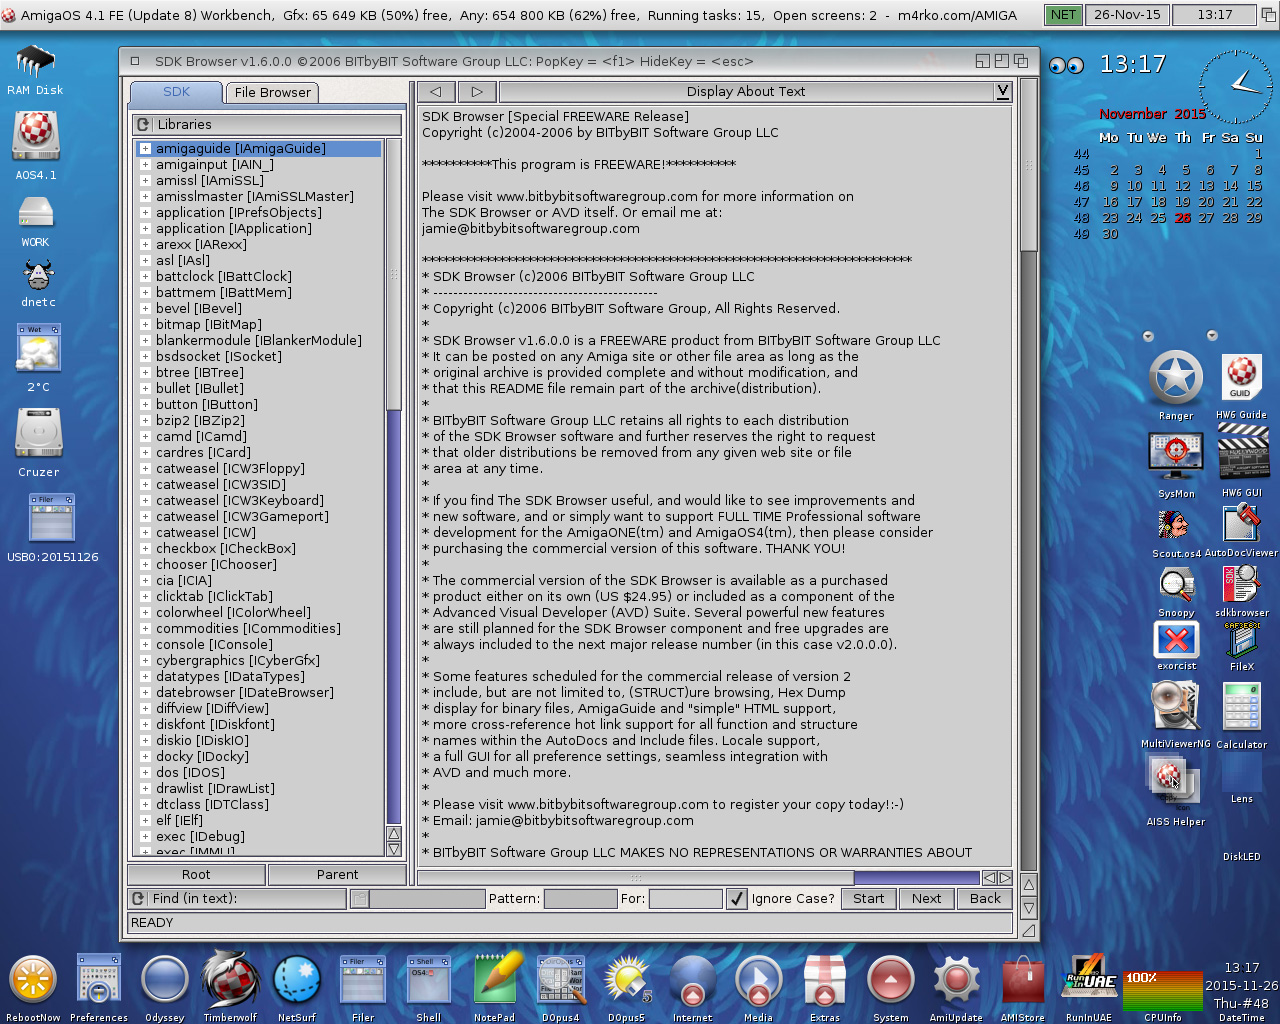 SDK Browser-AmigaOS 4.1 FE-Update 8-Workbench-AOS4.1u8